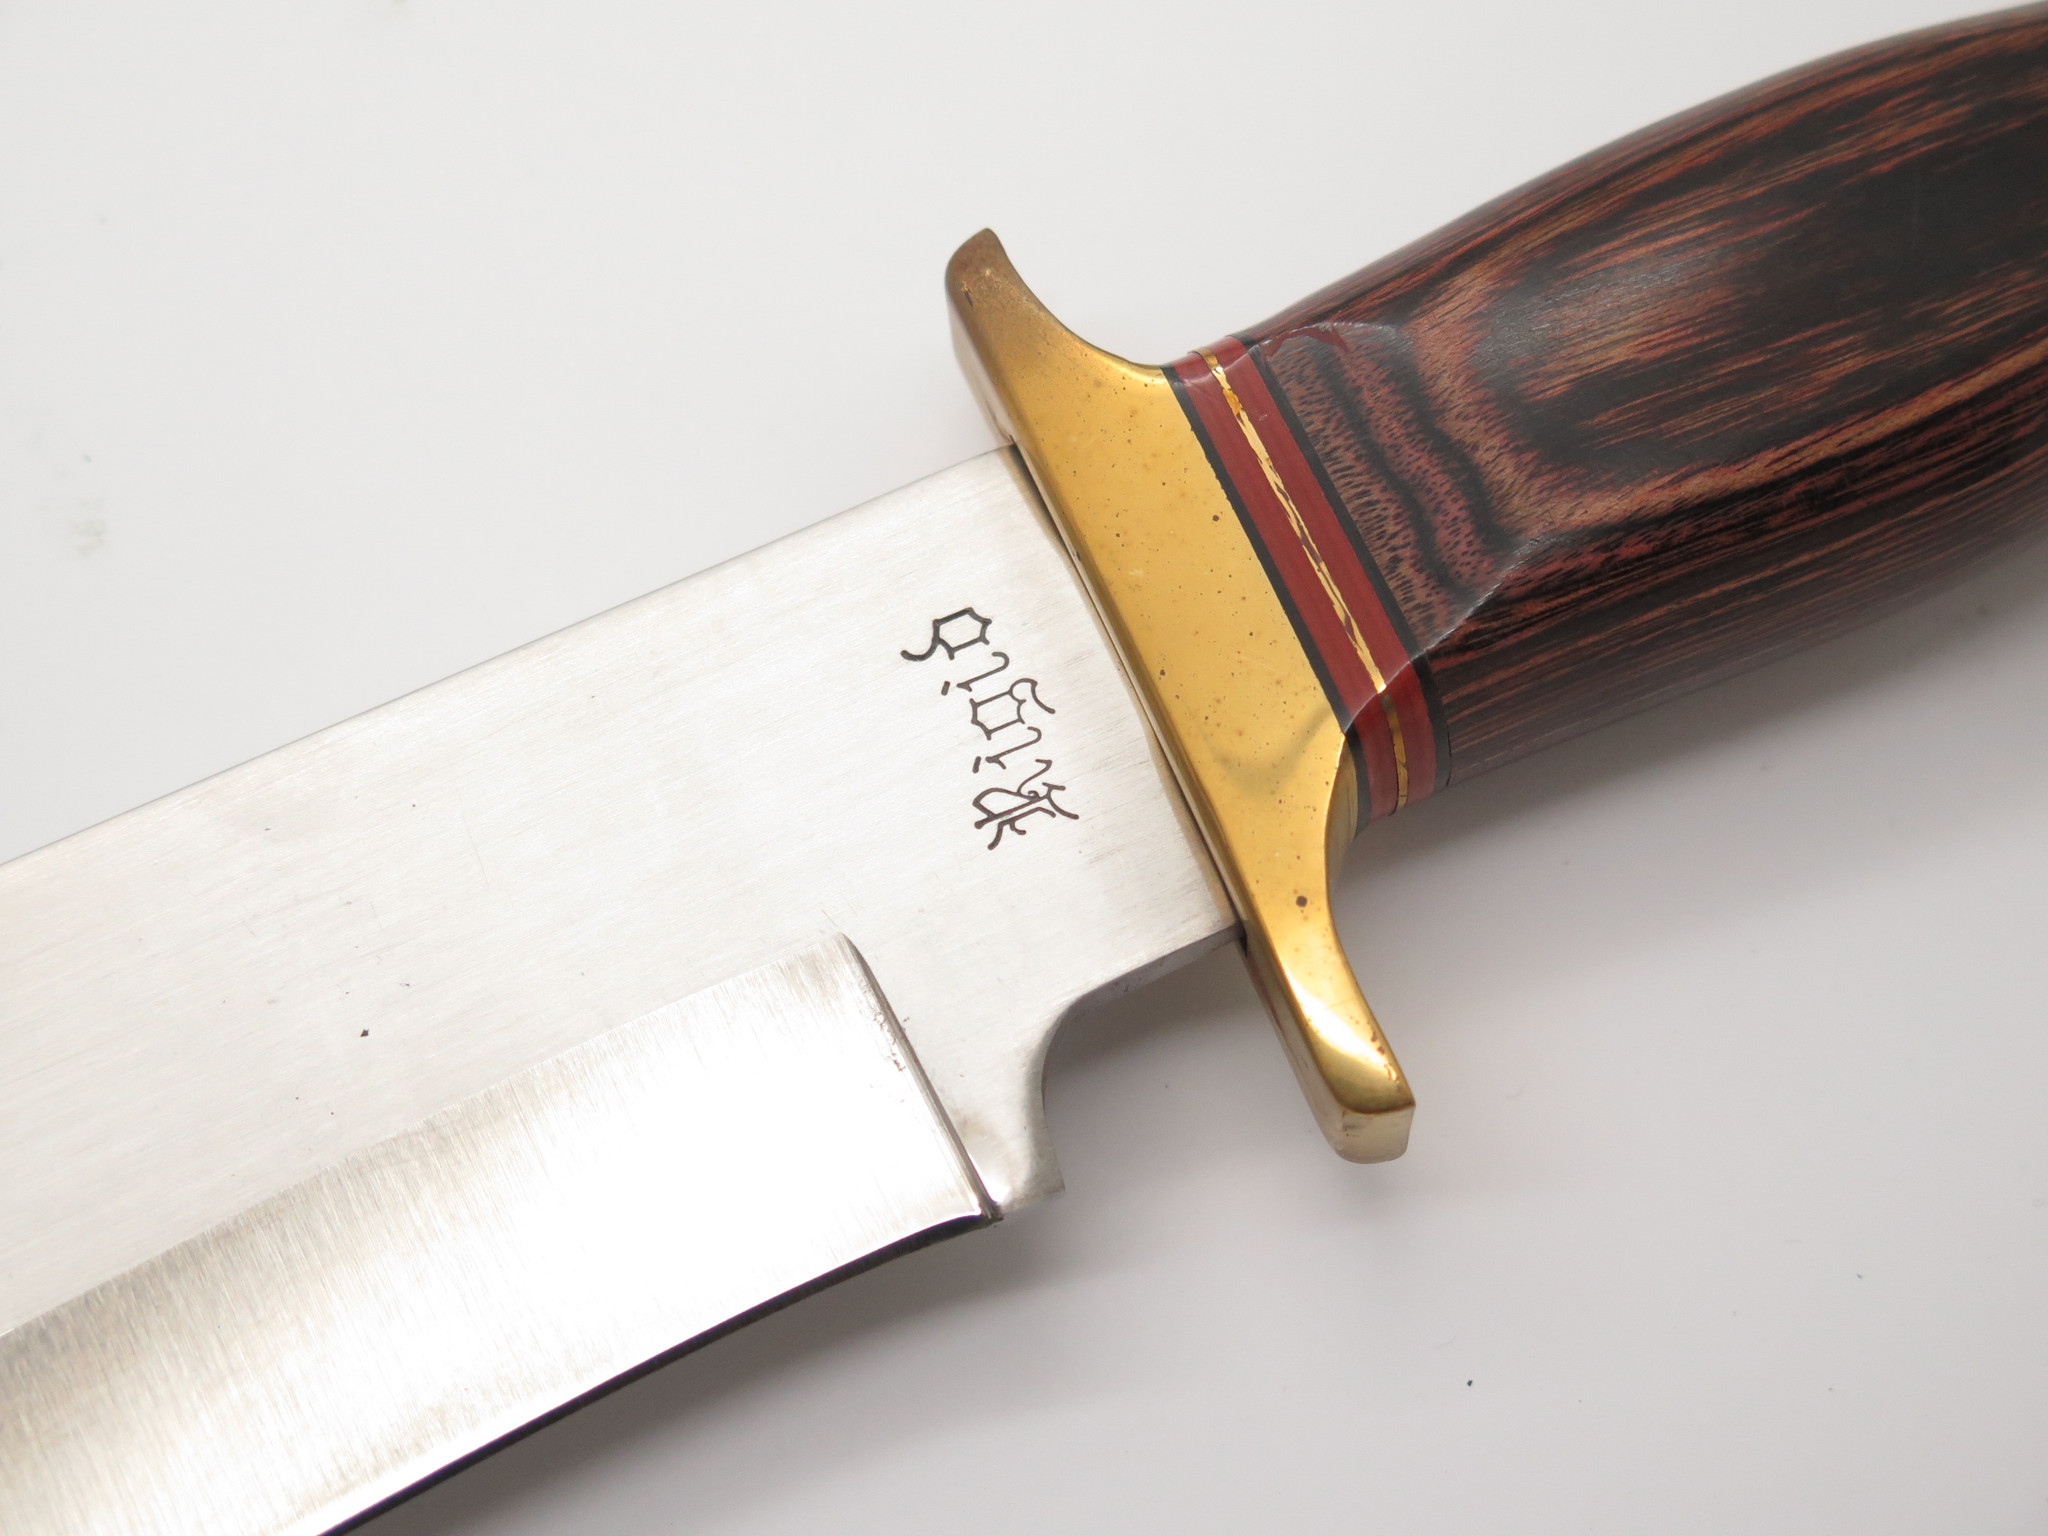 Vintage 1930's Iroka Fixed Knife, Made in Germany, Lightweight